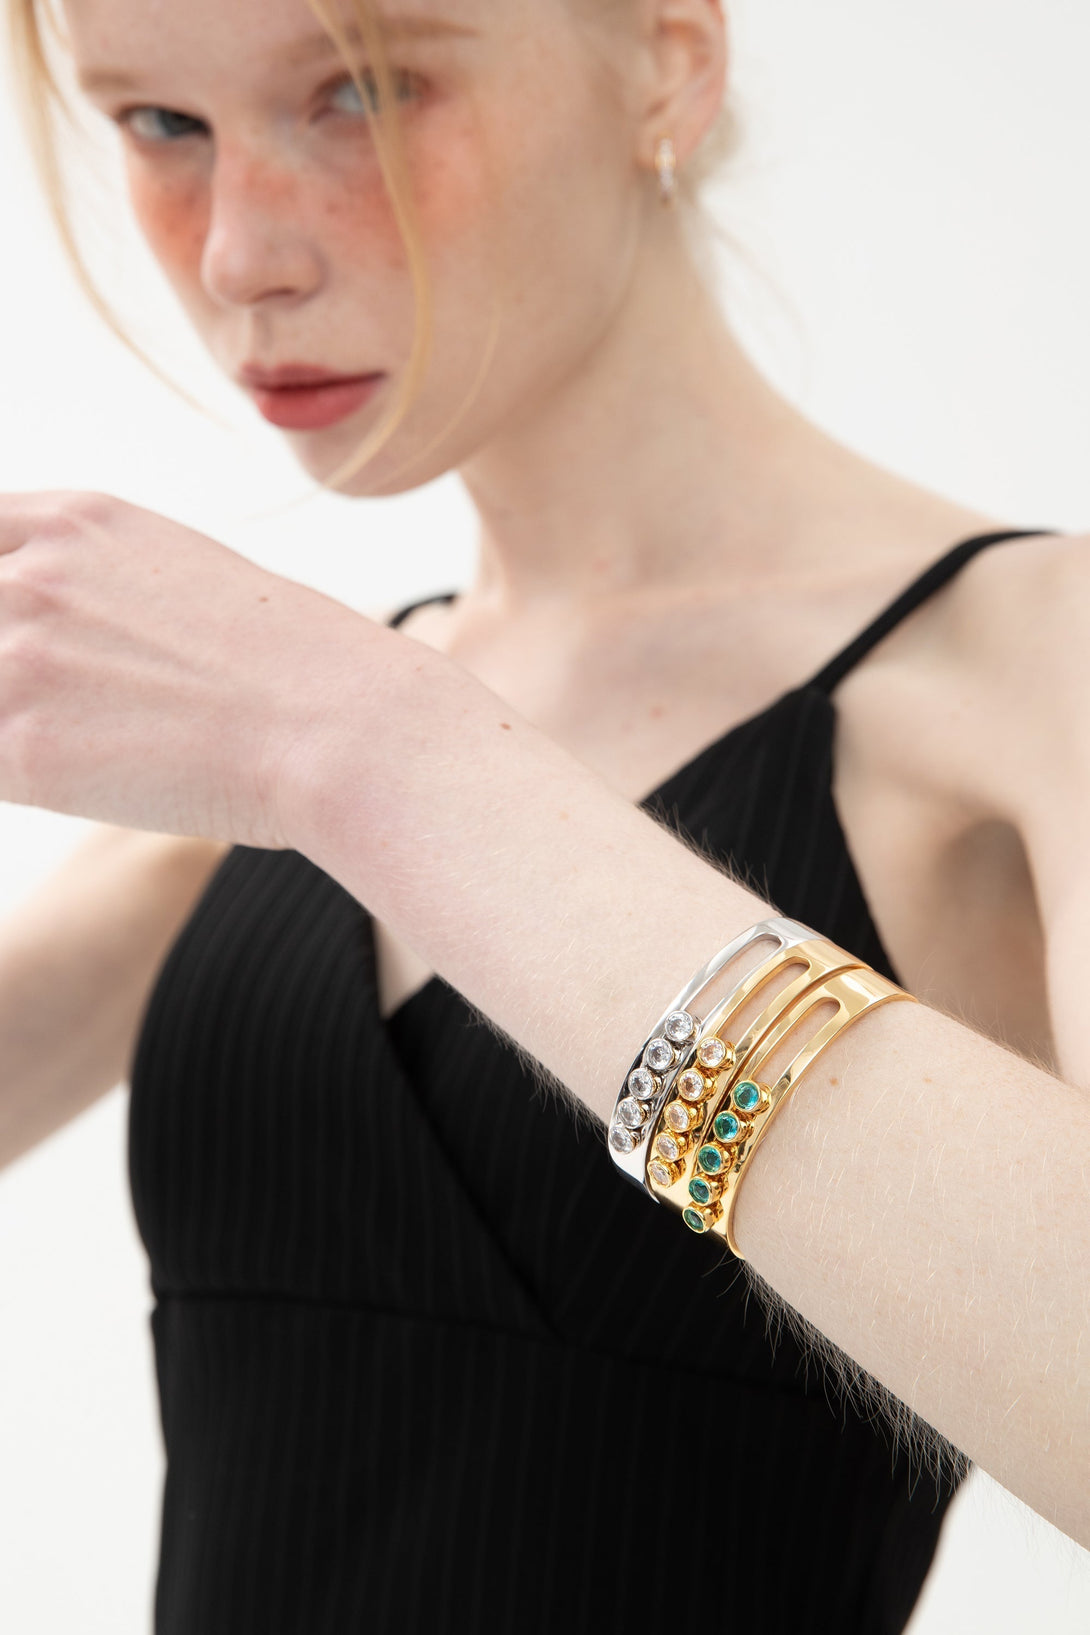 Audrey Gold Twinkling Aquamarine Zirconia Half Crescent Bangle Bracelet - Classicharms